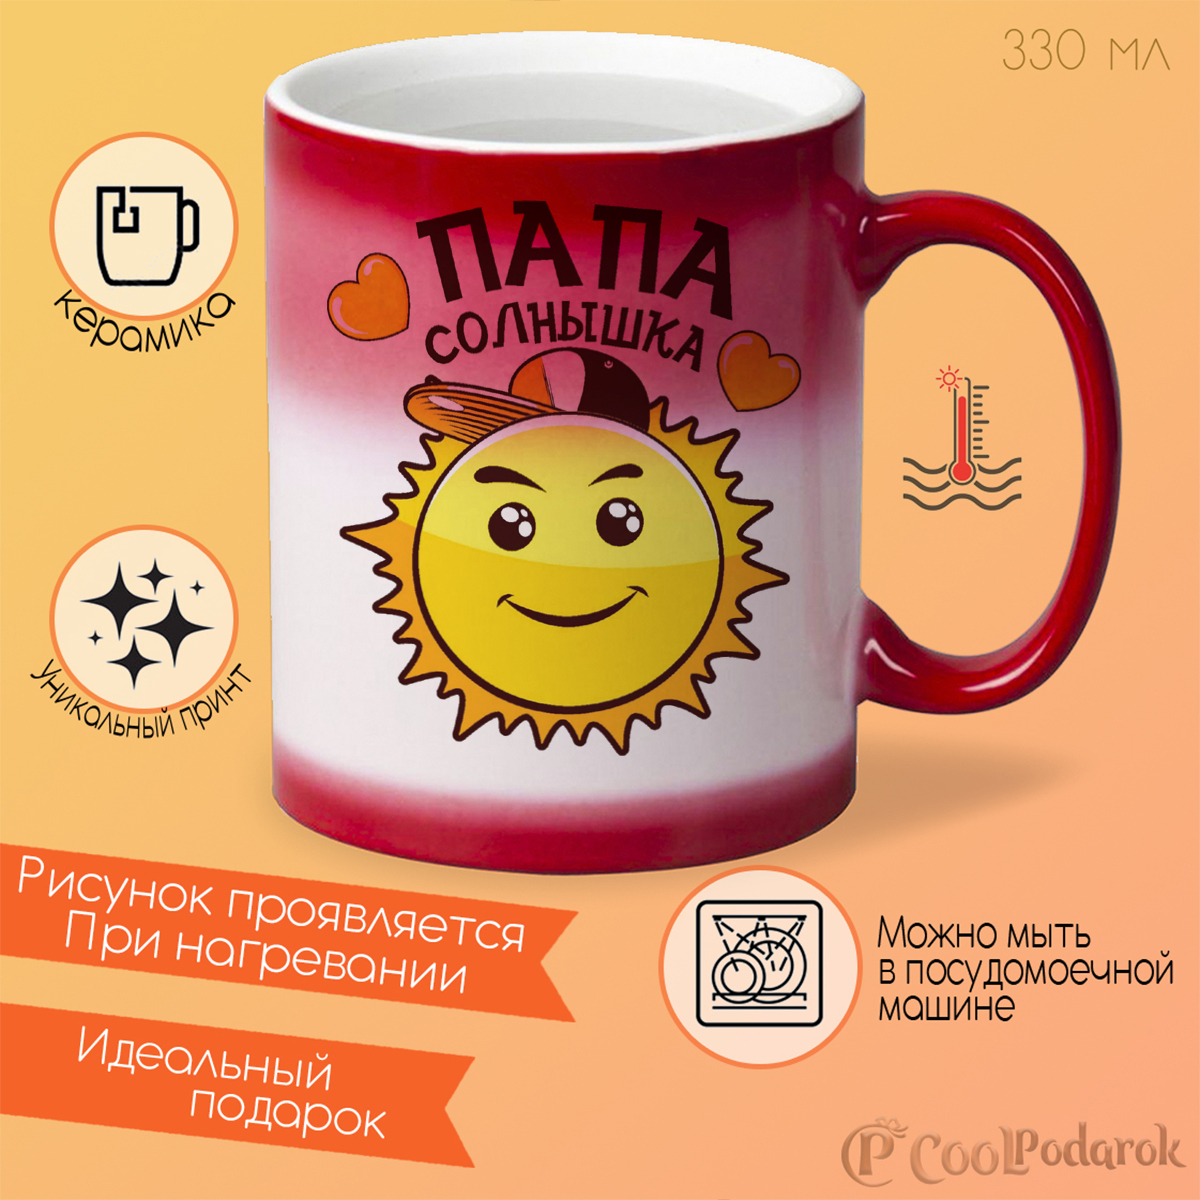 Кружка солнышко. Чашка Кружка солнышко. Дизайн чашки с солнышком. Кружка солнце. Солнце папины